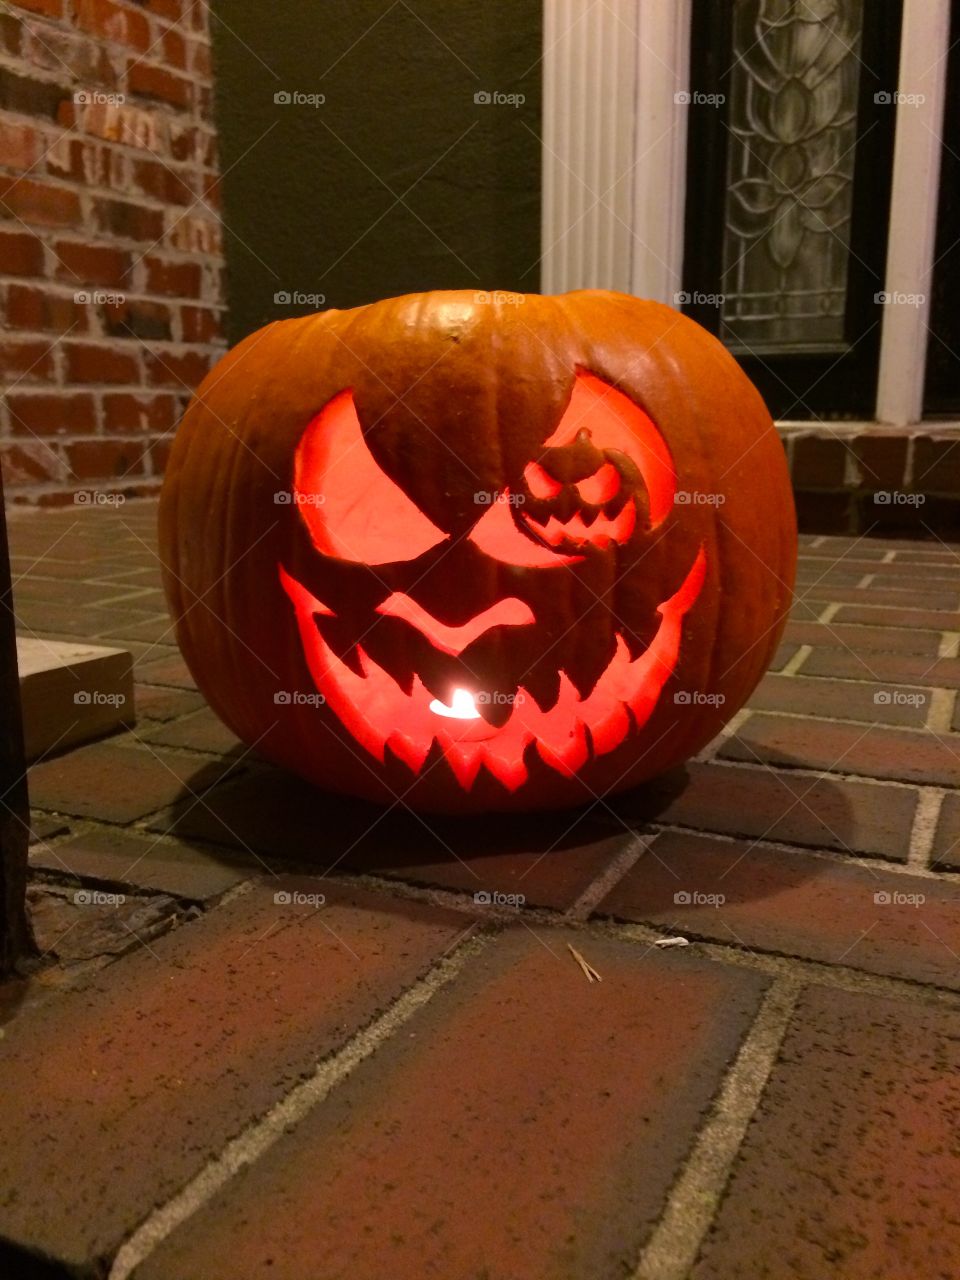 Carved Halloween pumpkin